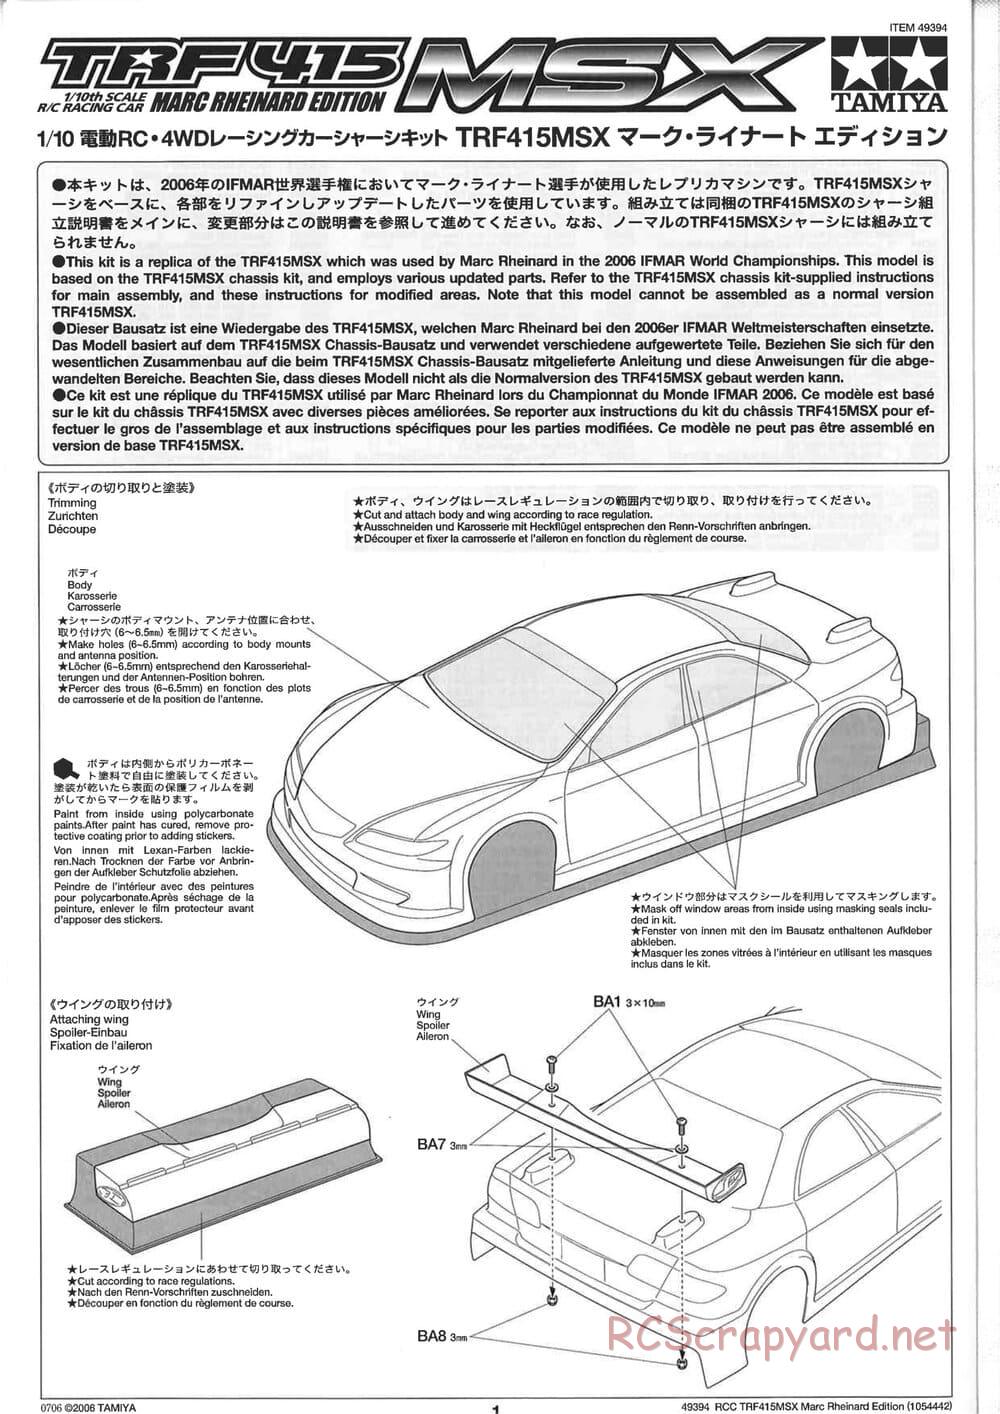 Tamiya - TRF415-MSX Marc Rheinard Edition Chassis - Manual - Page 1